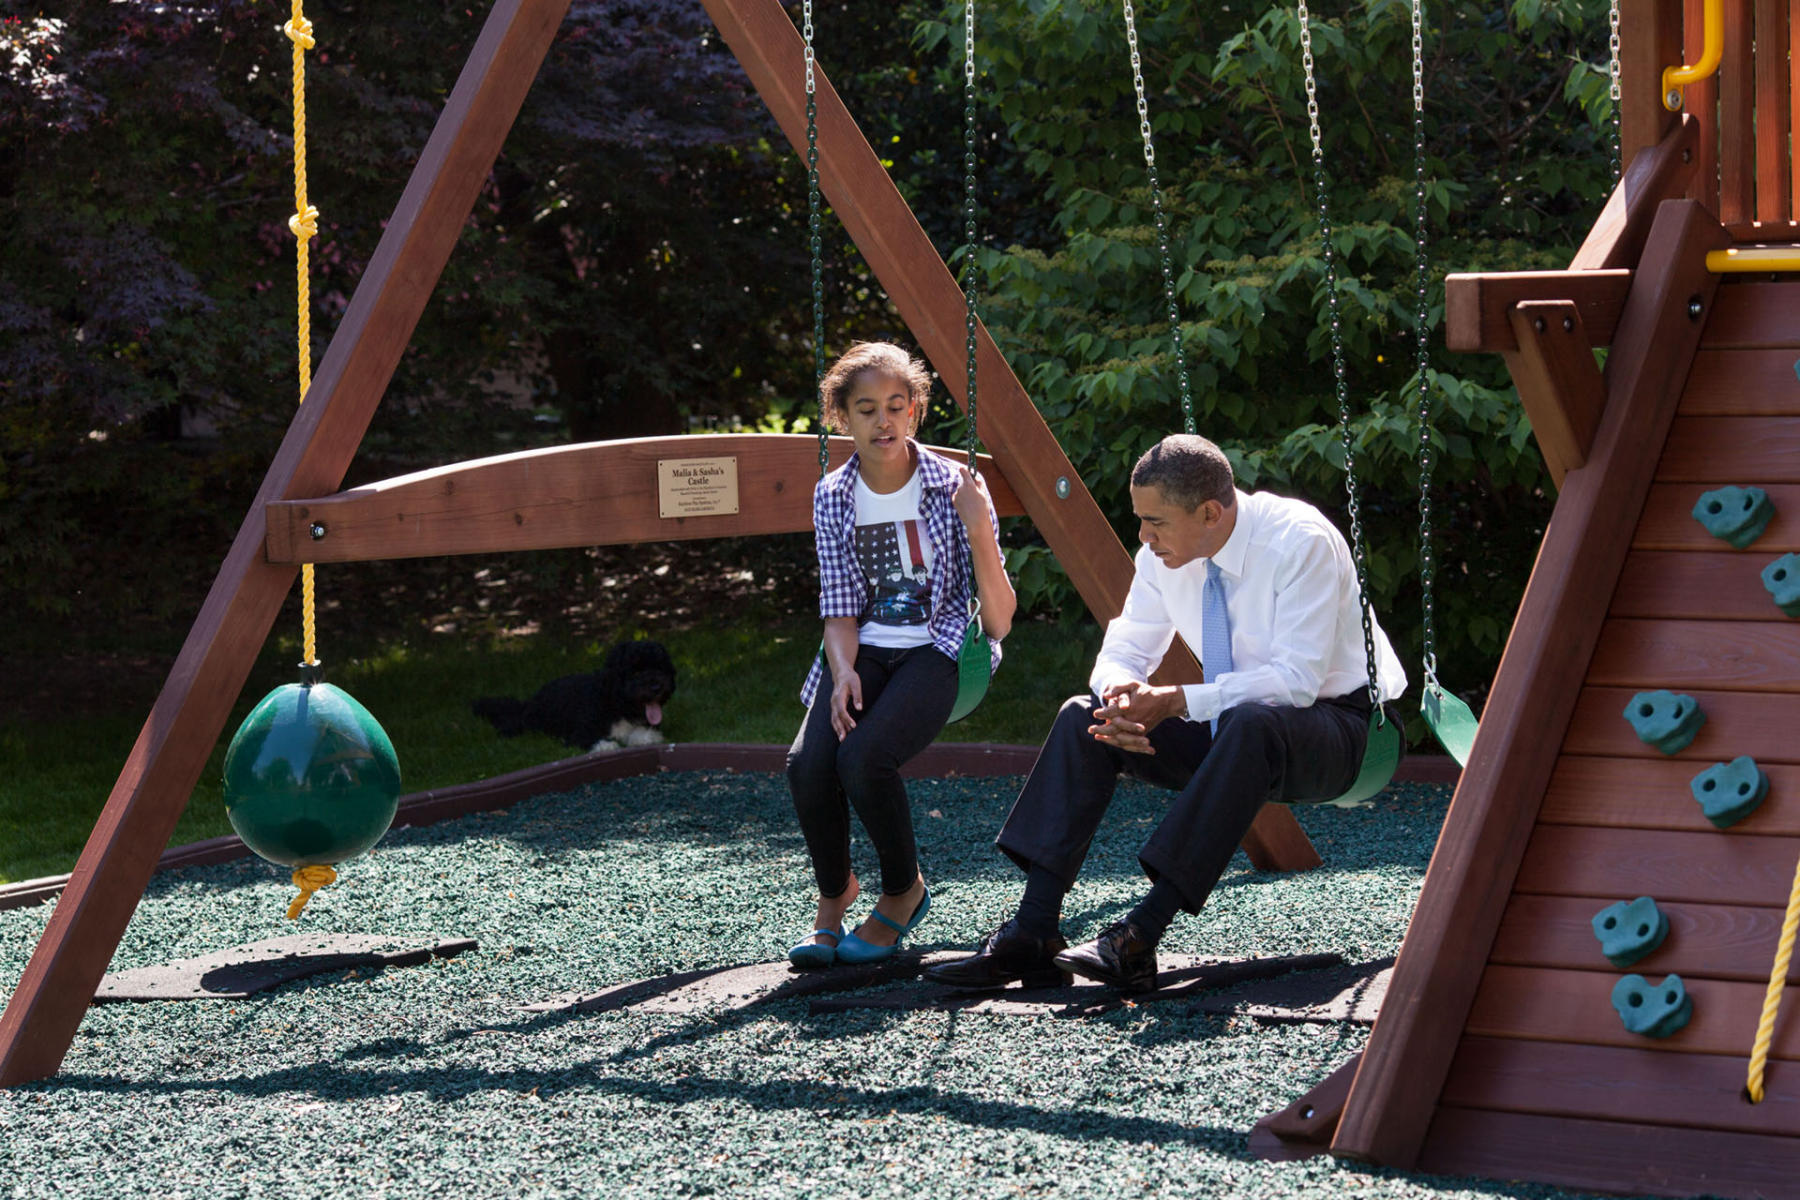  : President Obama : Pete Souza Photography